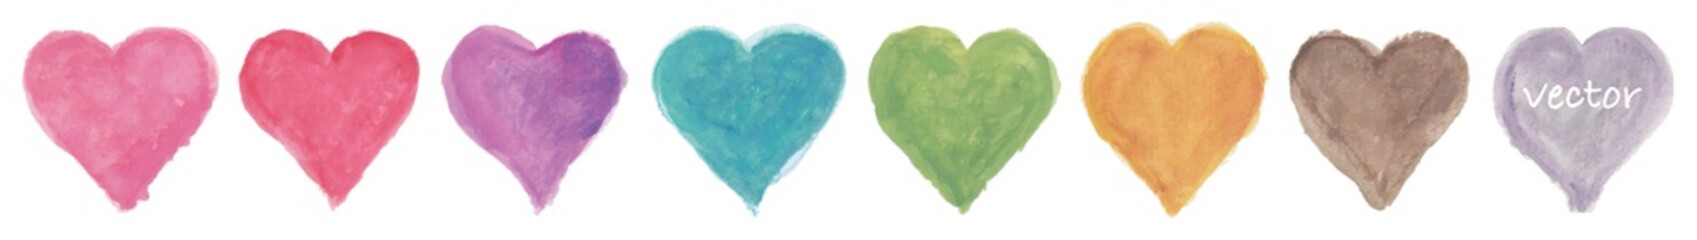 Vector watercolor colorful heart set